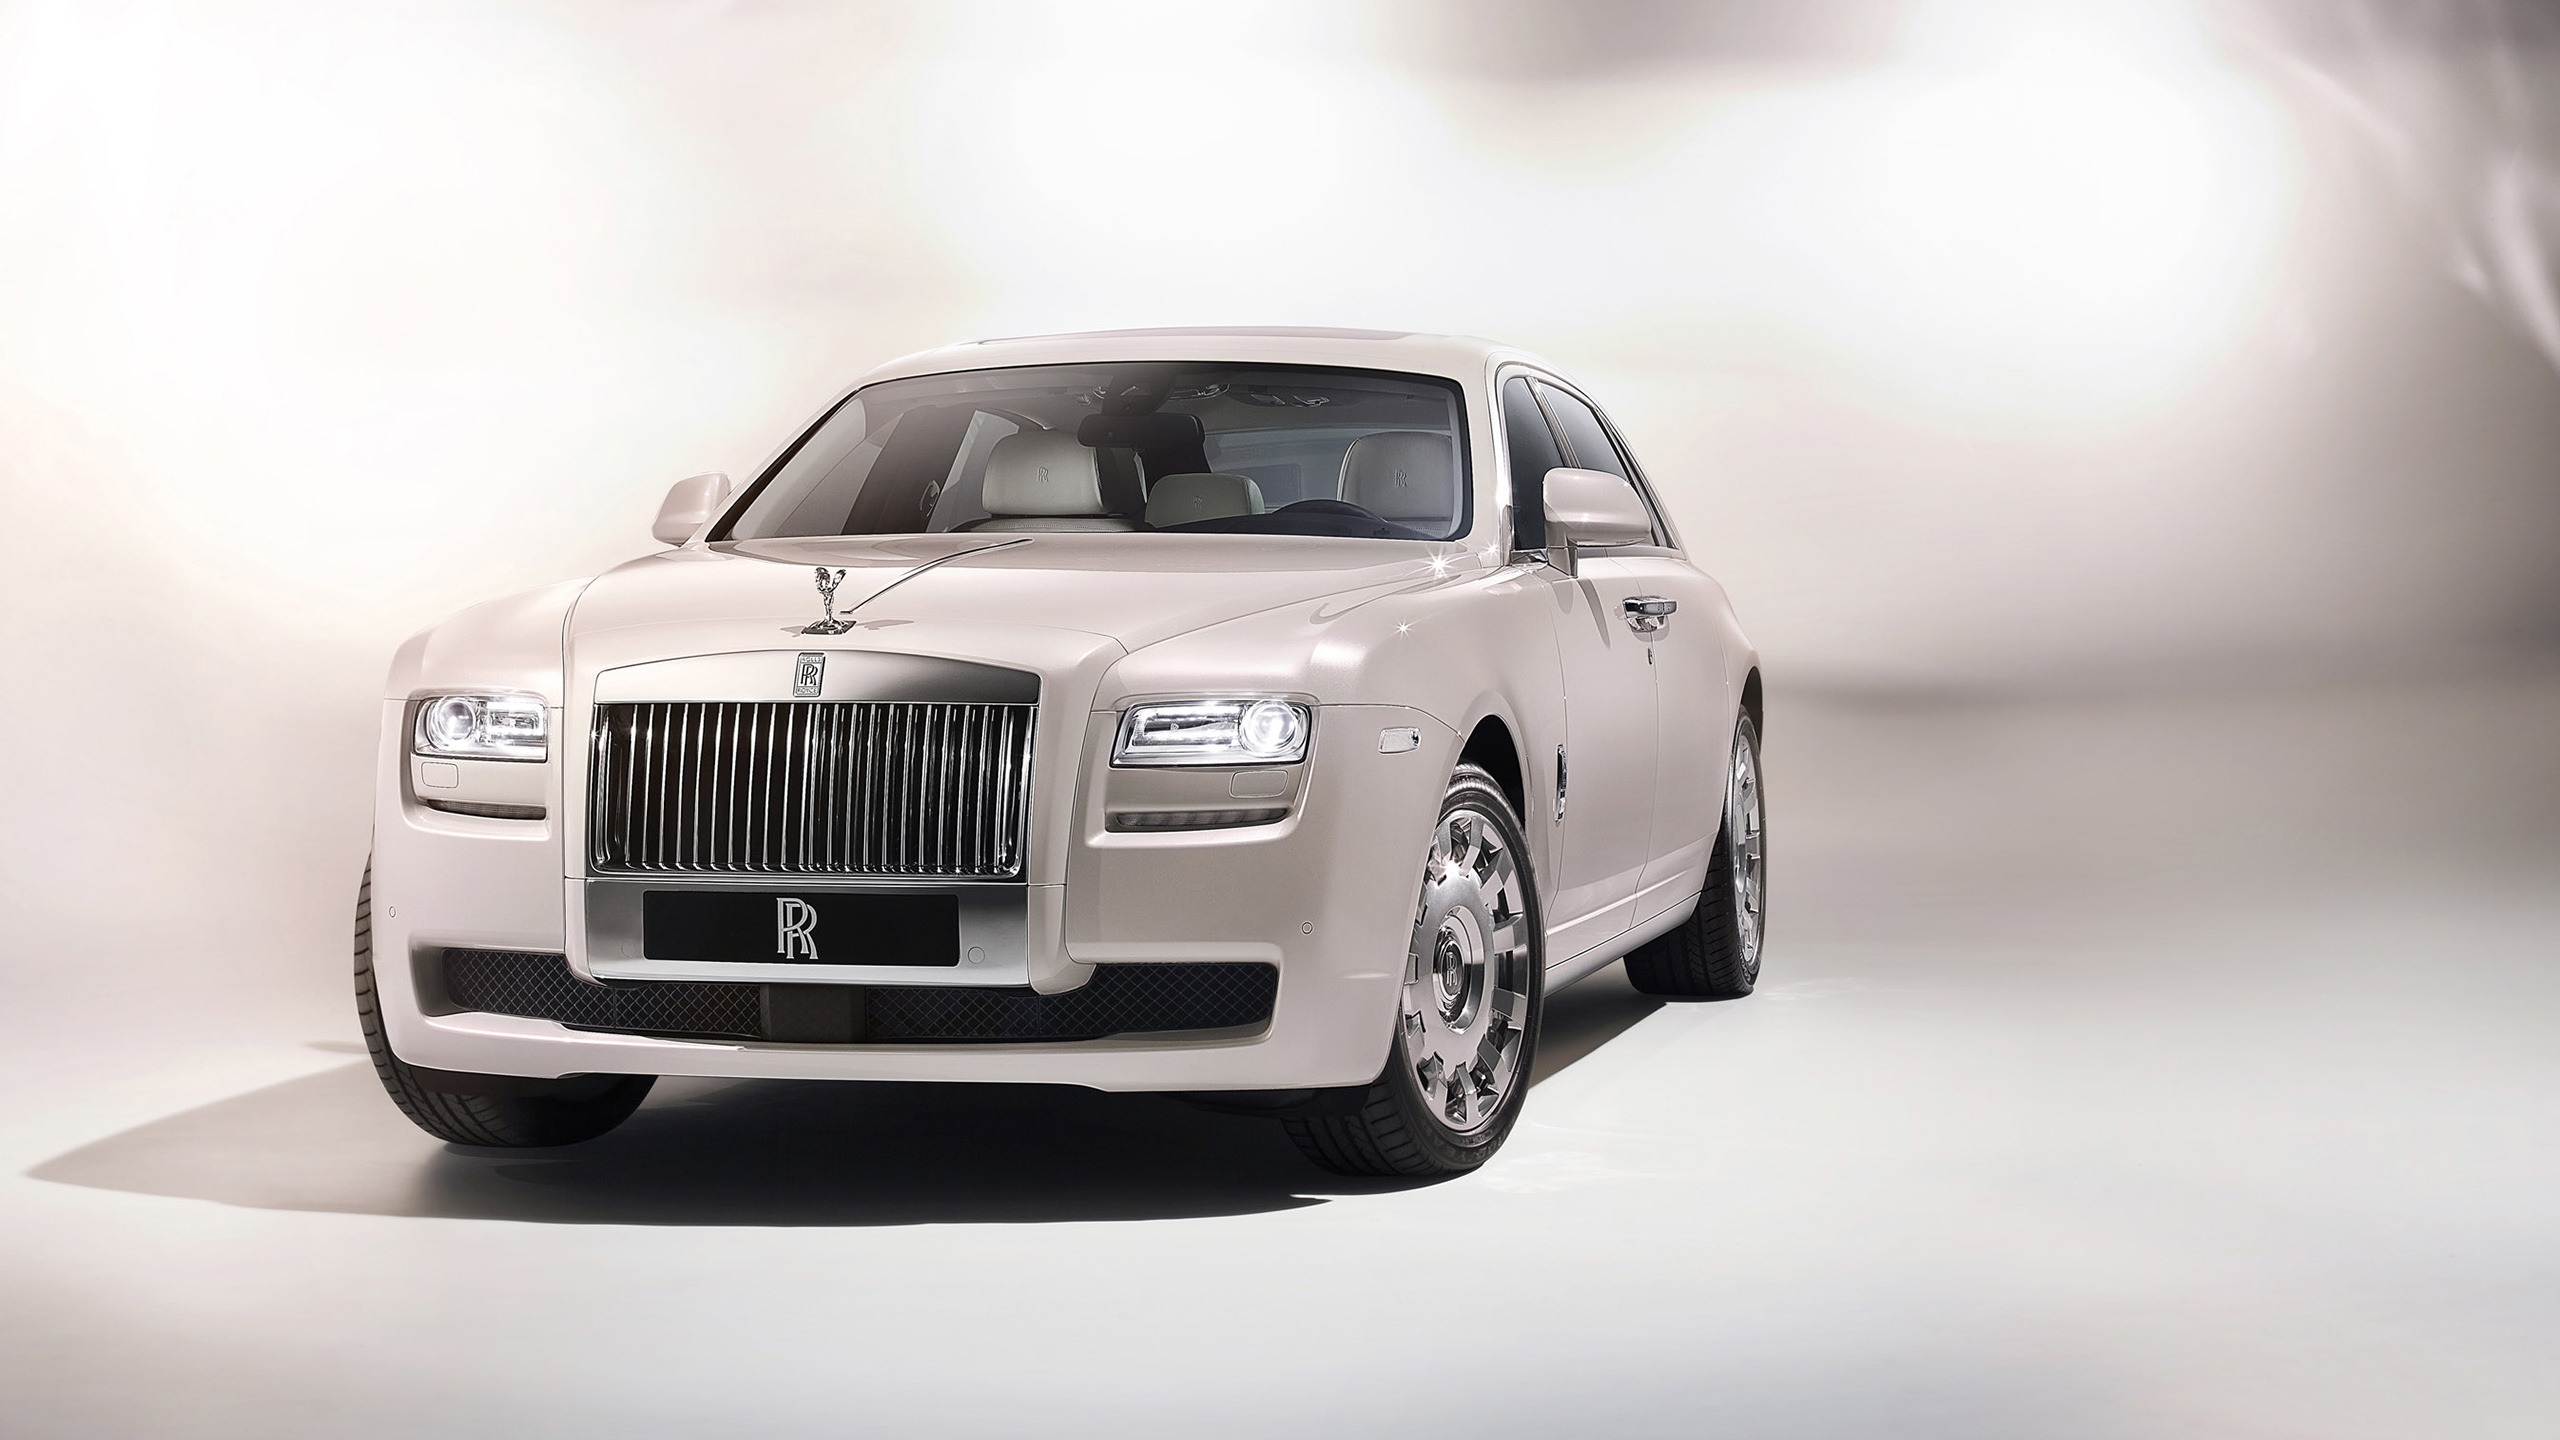 Rolls Royce Ghost Six Senses Concept for 2560x1440 HDTV resolution